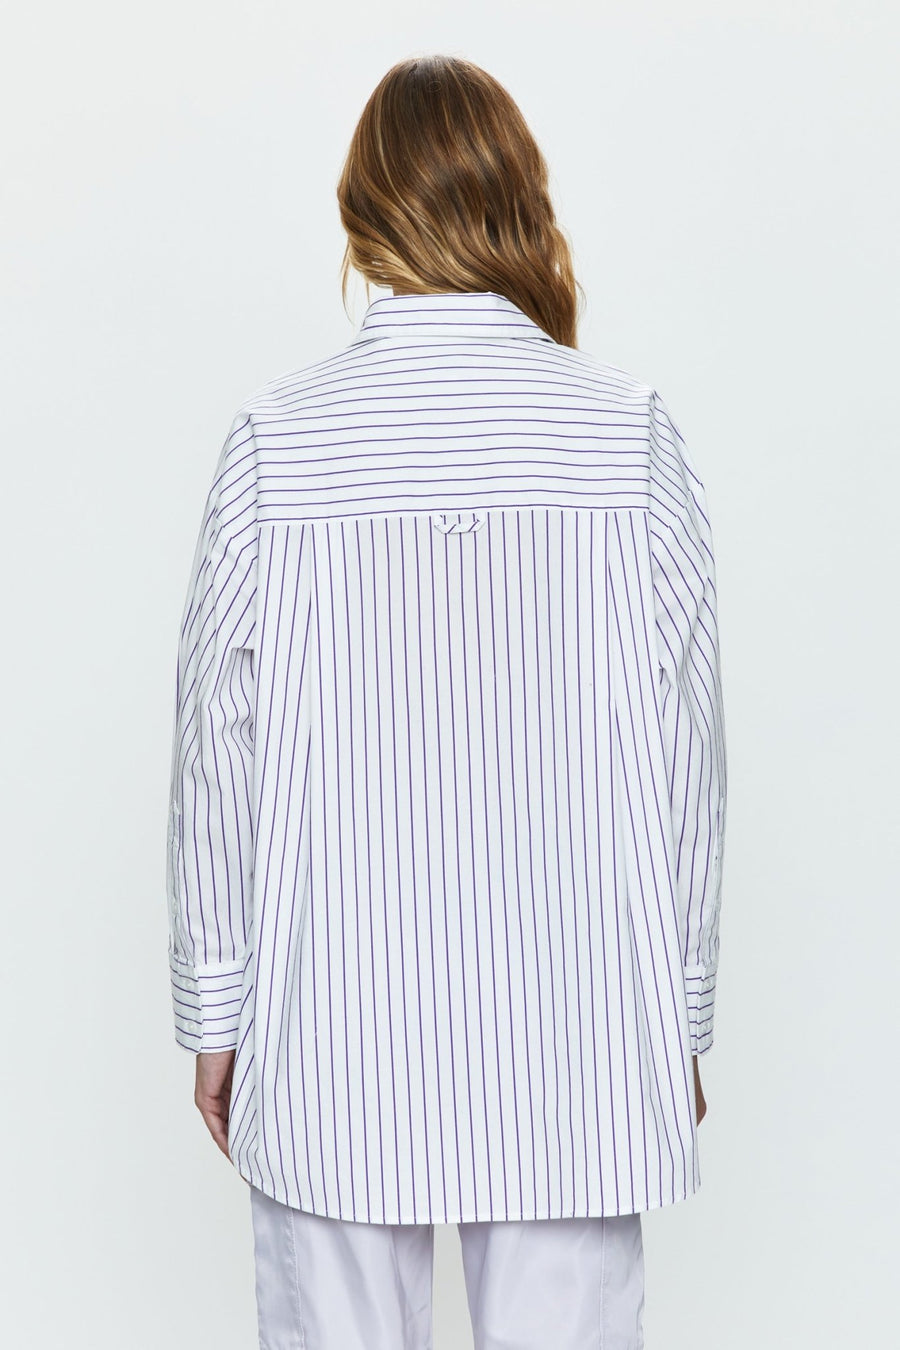 Rena Button Down Tunic Shirt - Violette Stripe